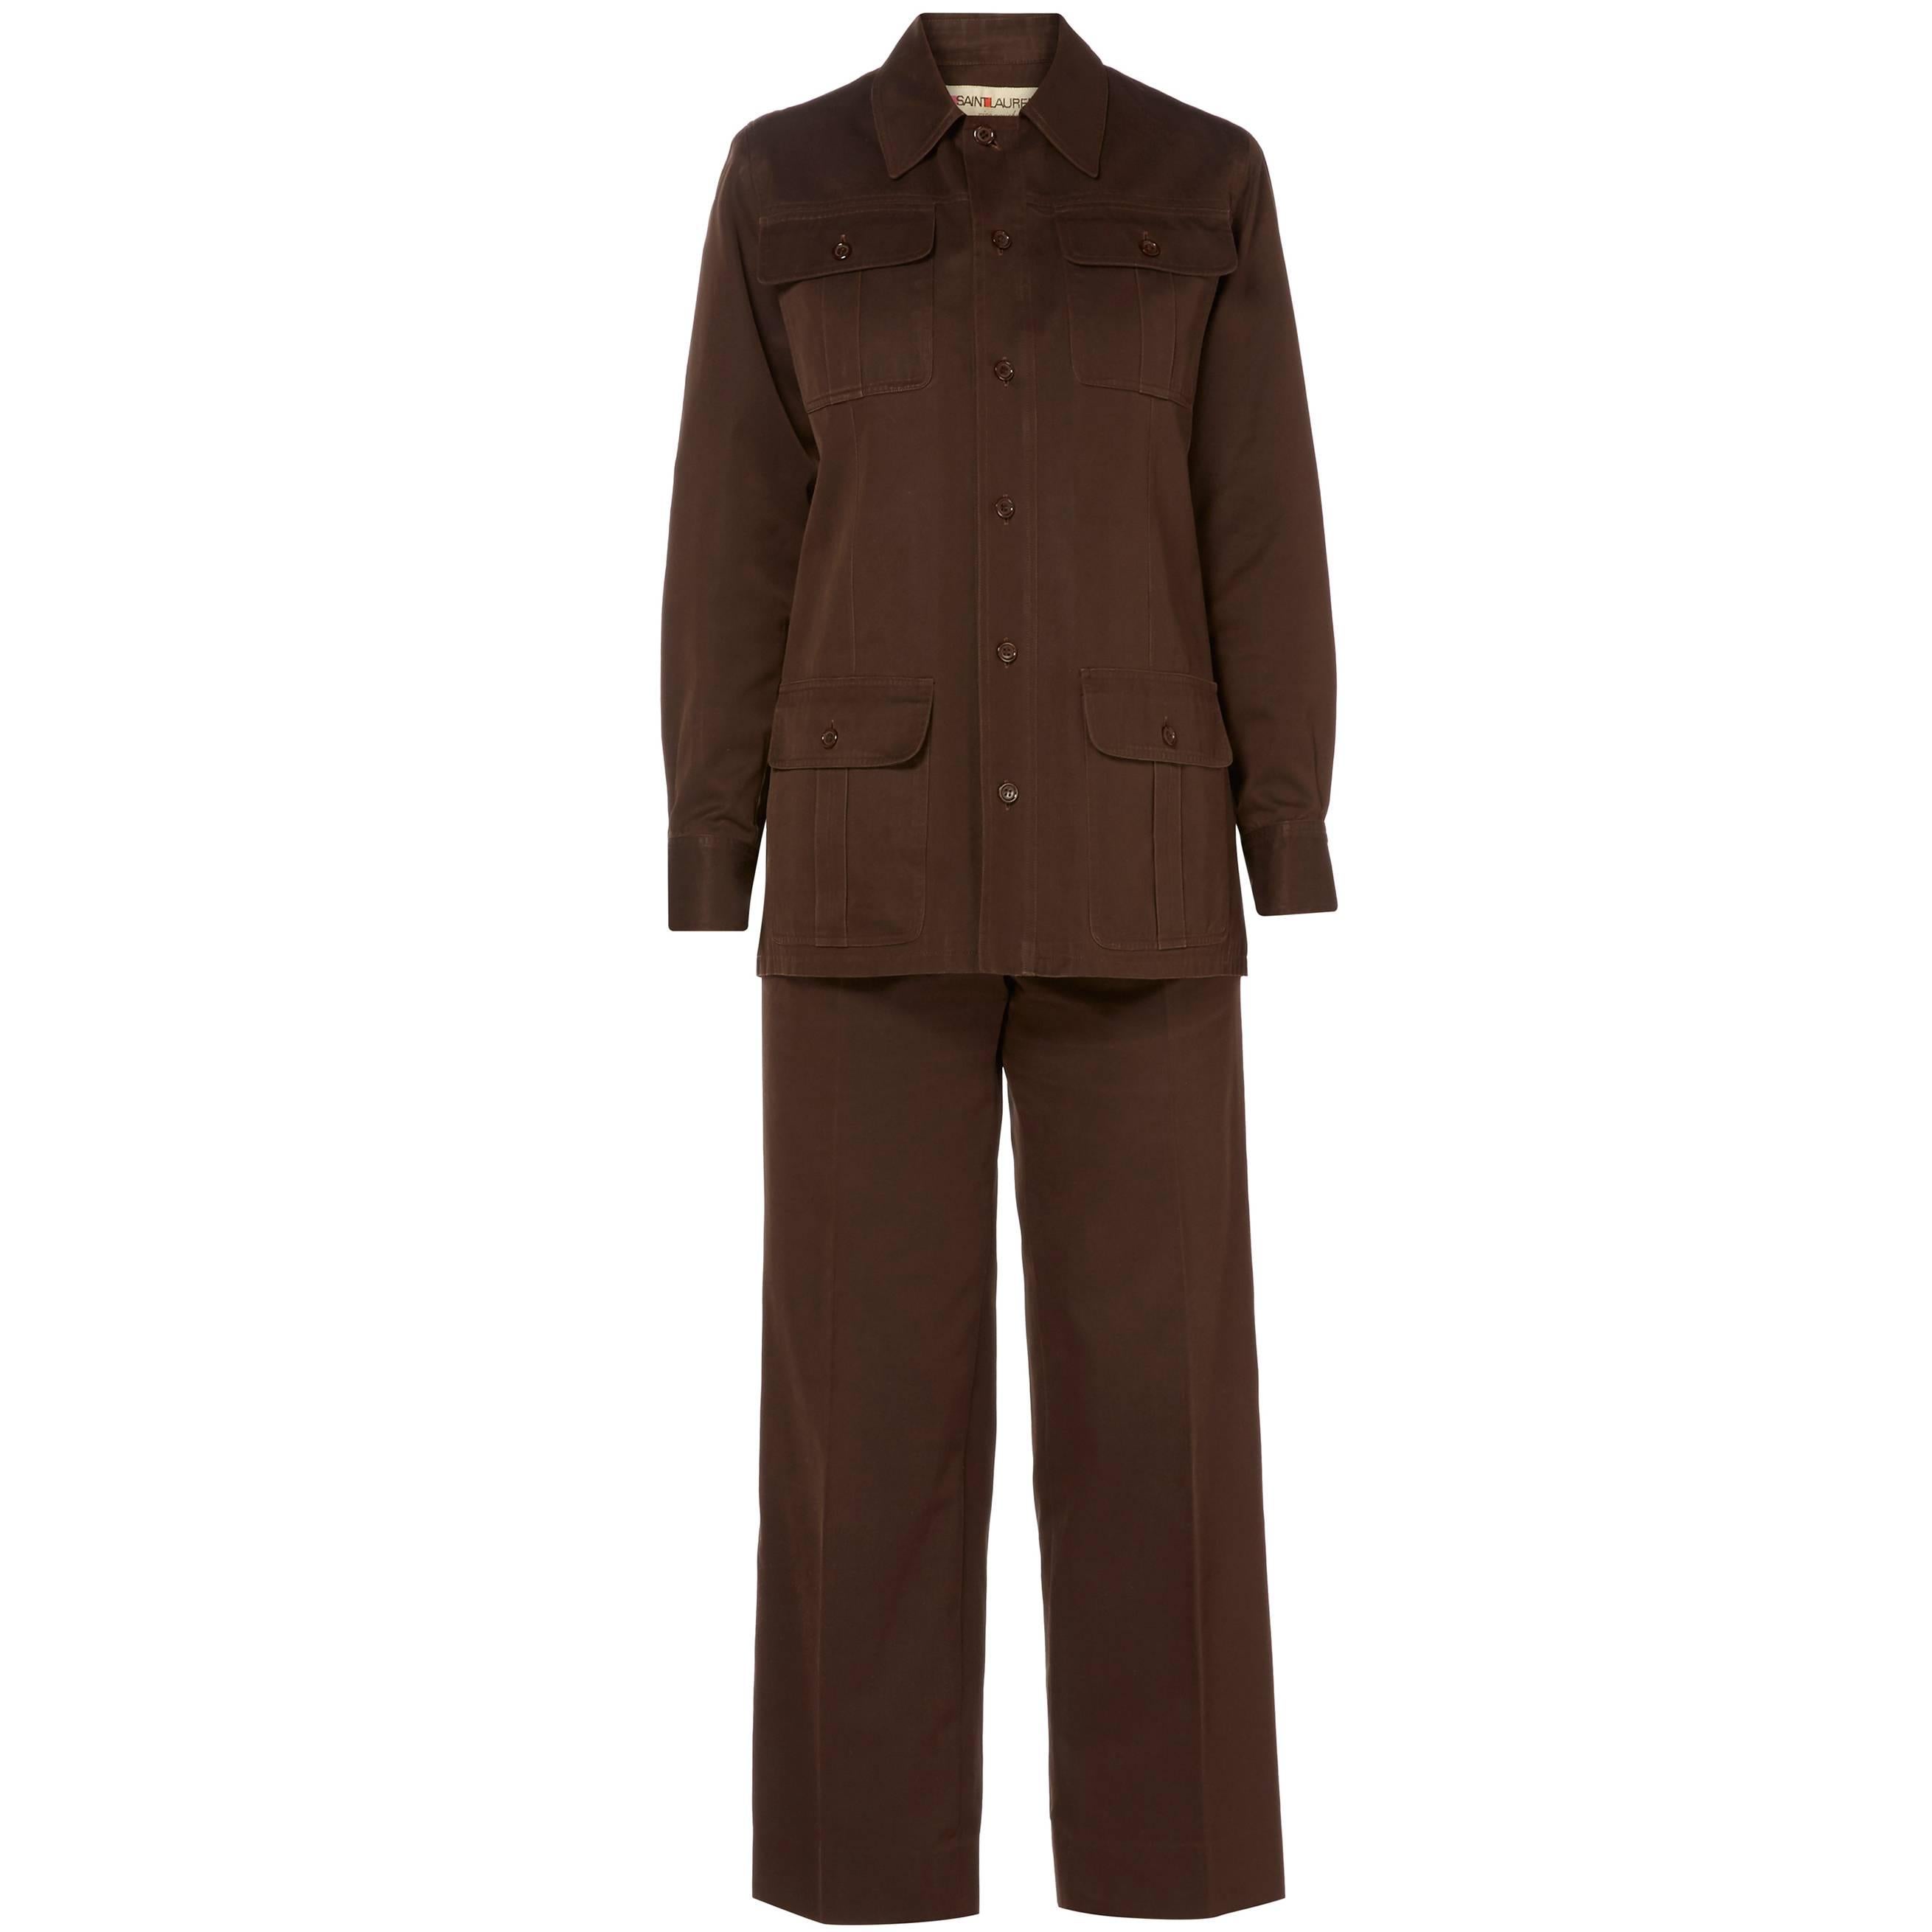 Yves Saint Laurent brown safari trouser suit, circa 1972 For Sale